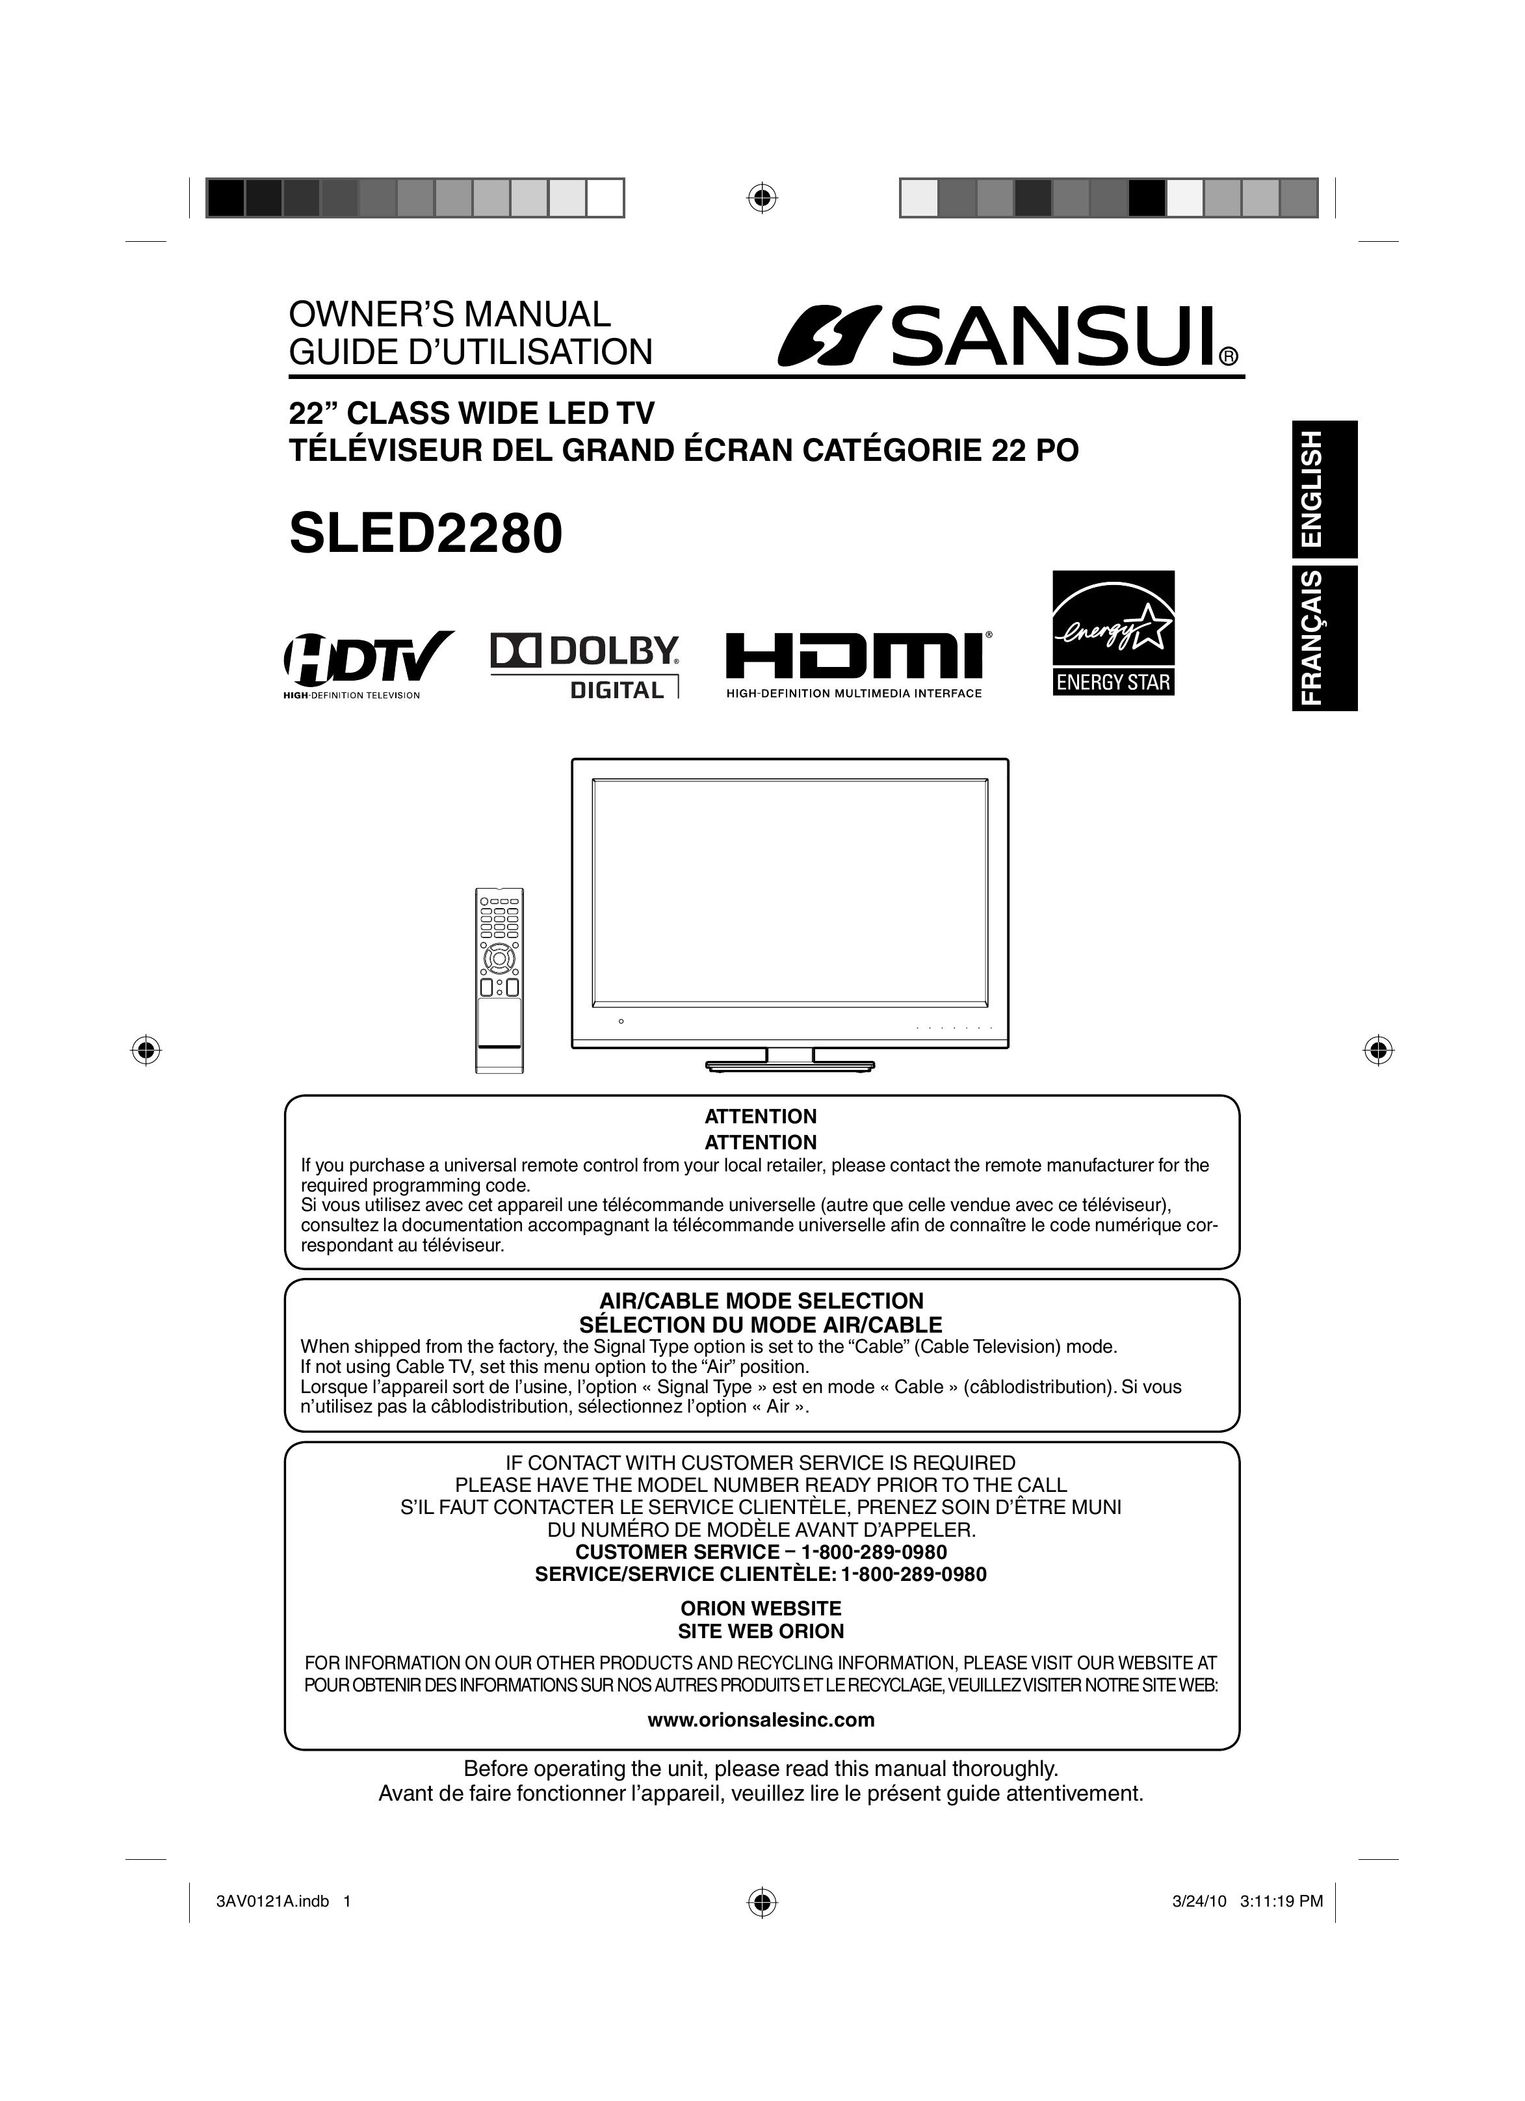 Sansui SLED2280 Flat Panel Television User Manual